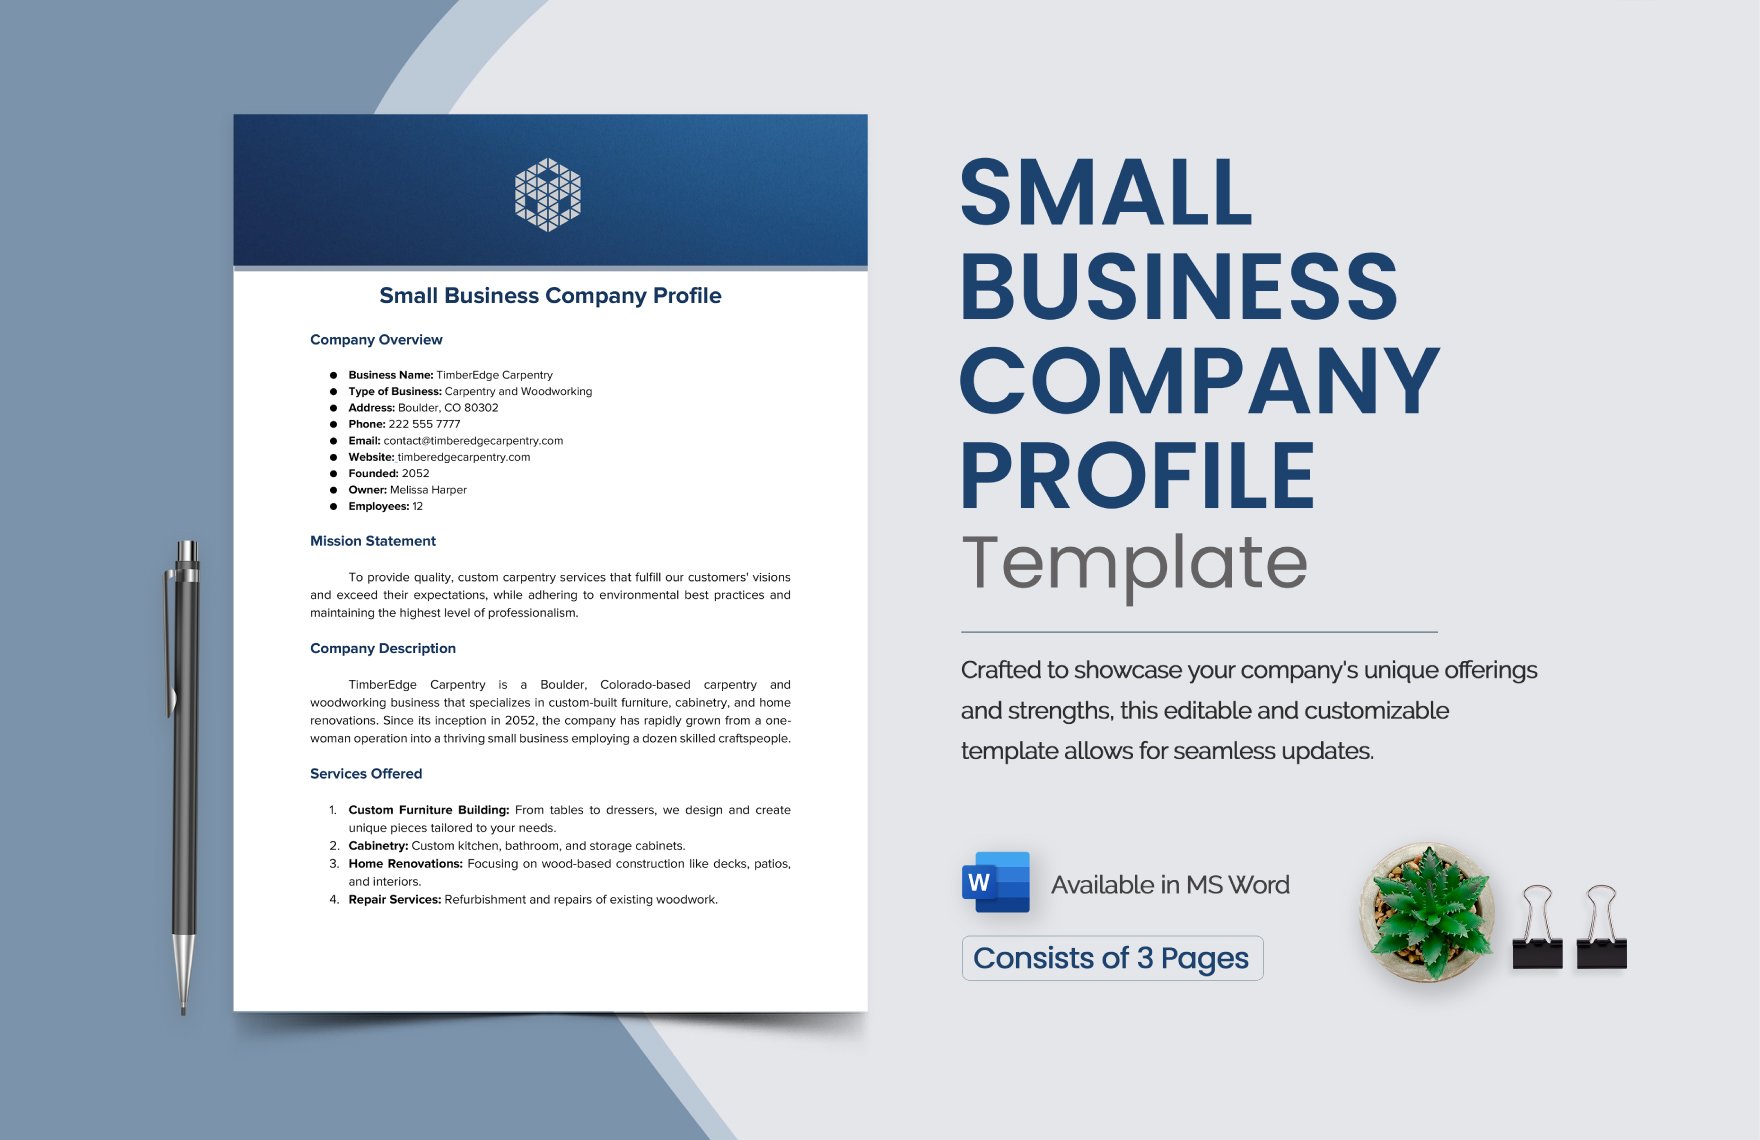 Small Business Company Profile Template